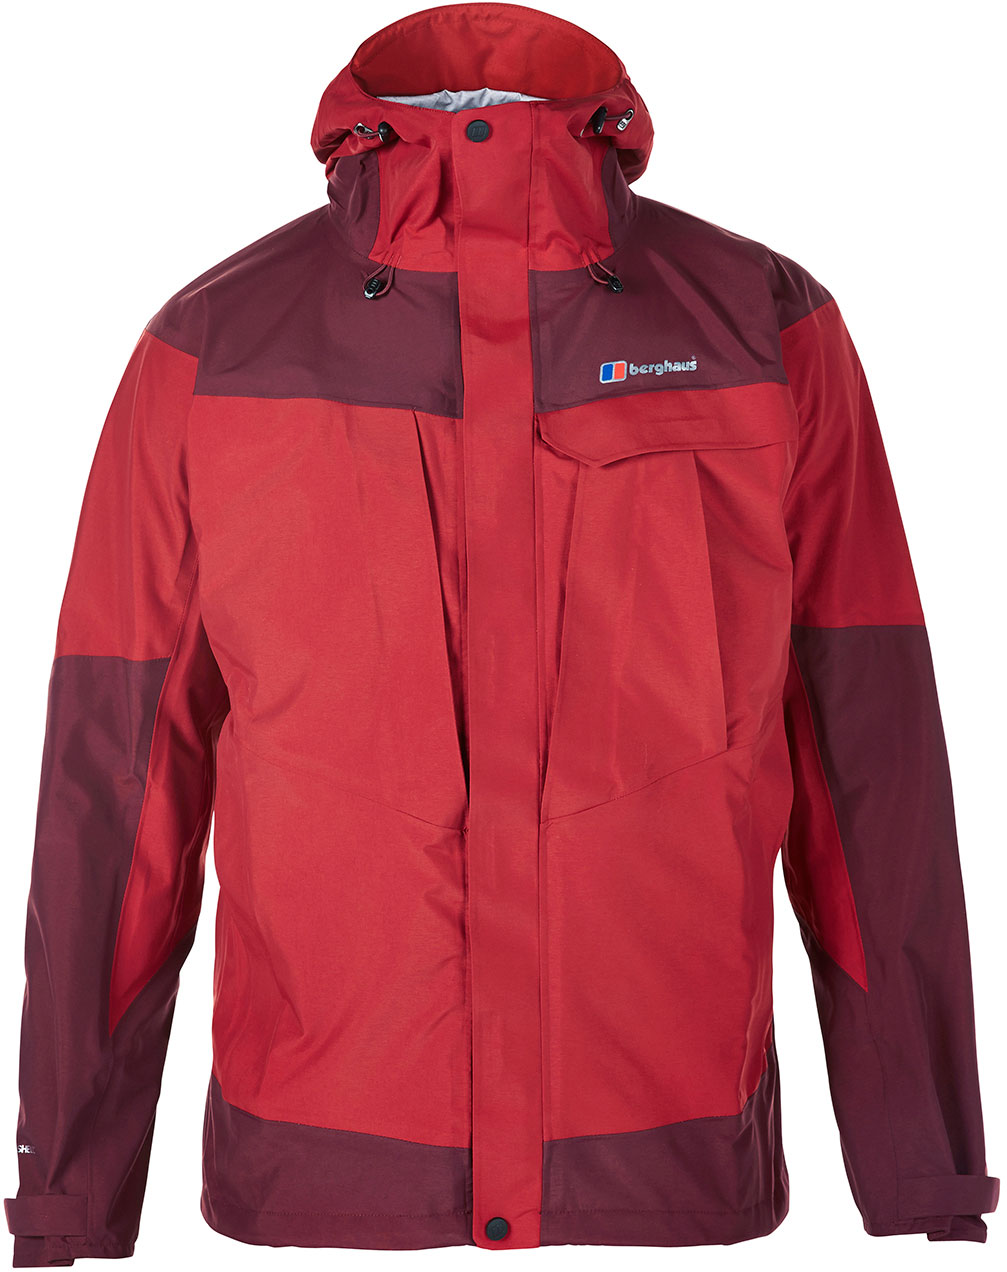 Berghaus High Trails Waterproof Jacket 21694/C63 Carbon/Black NEW